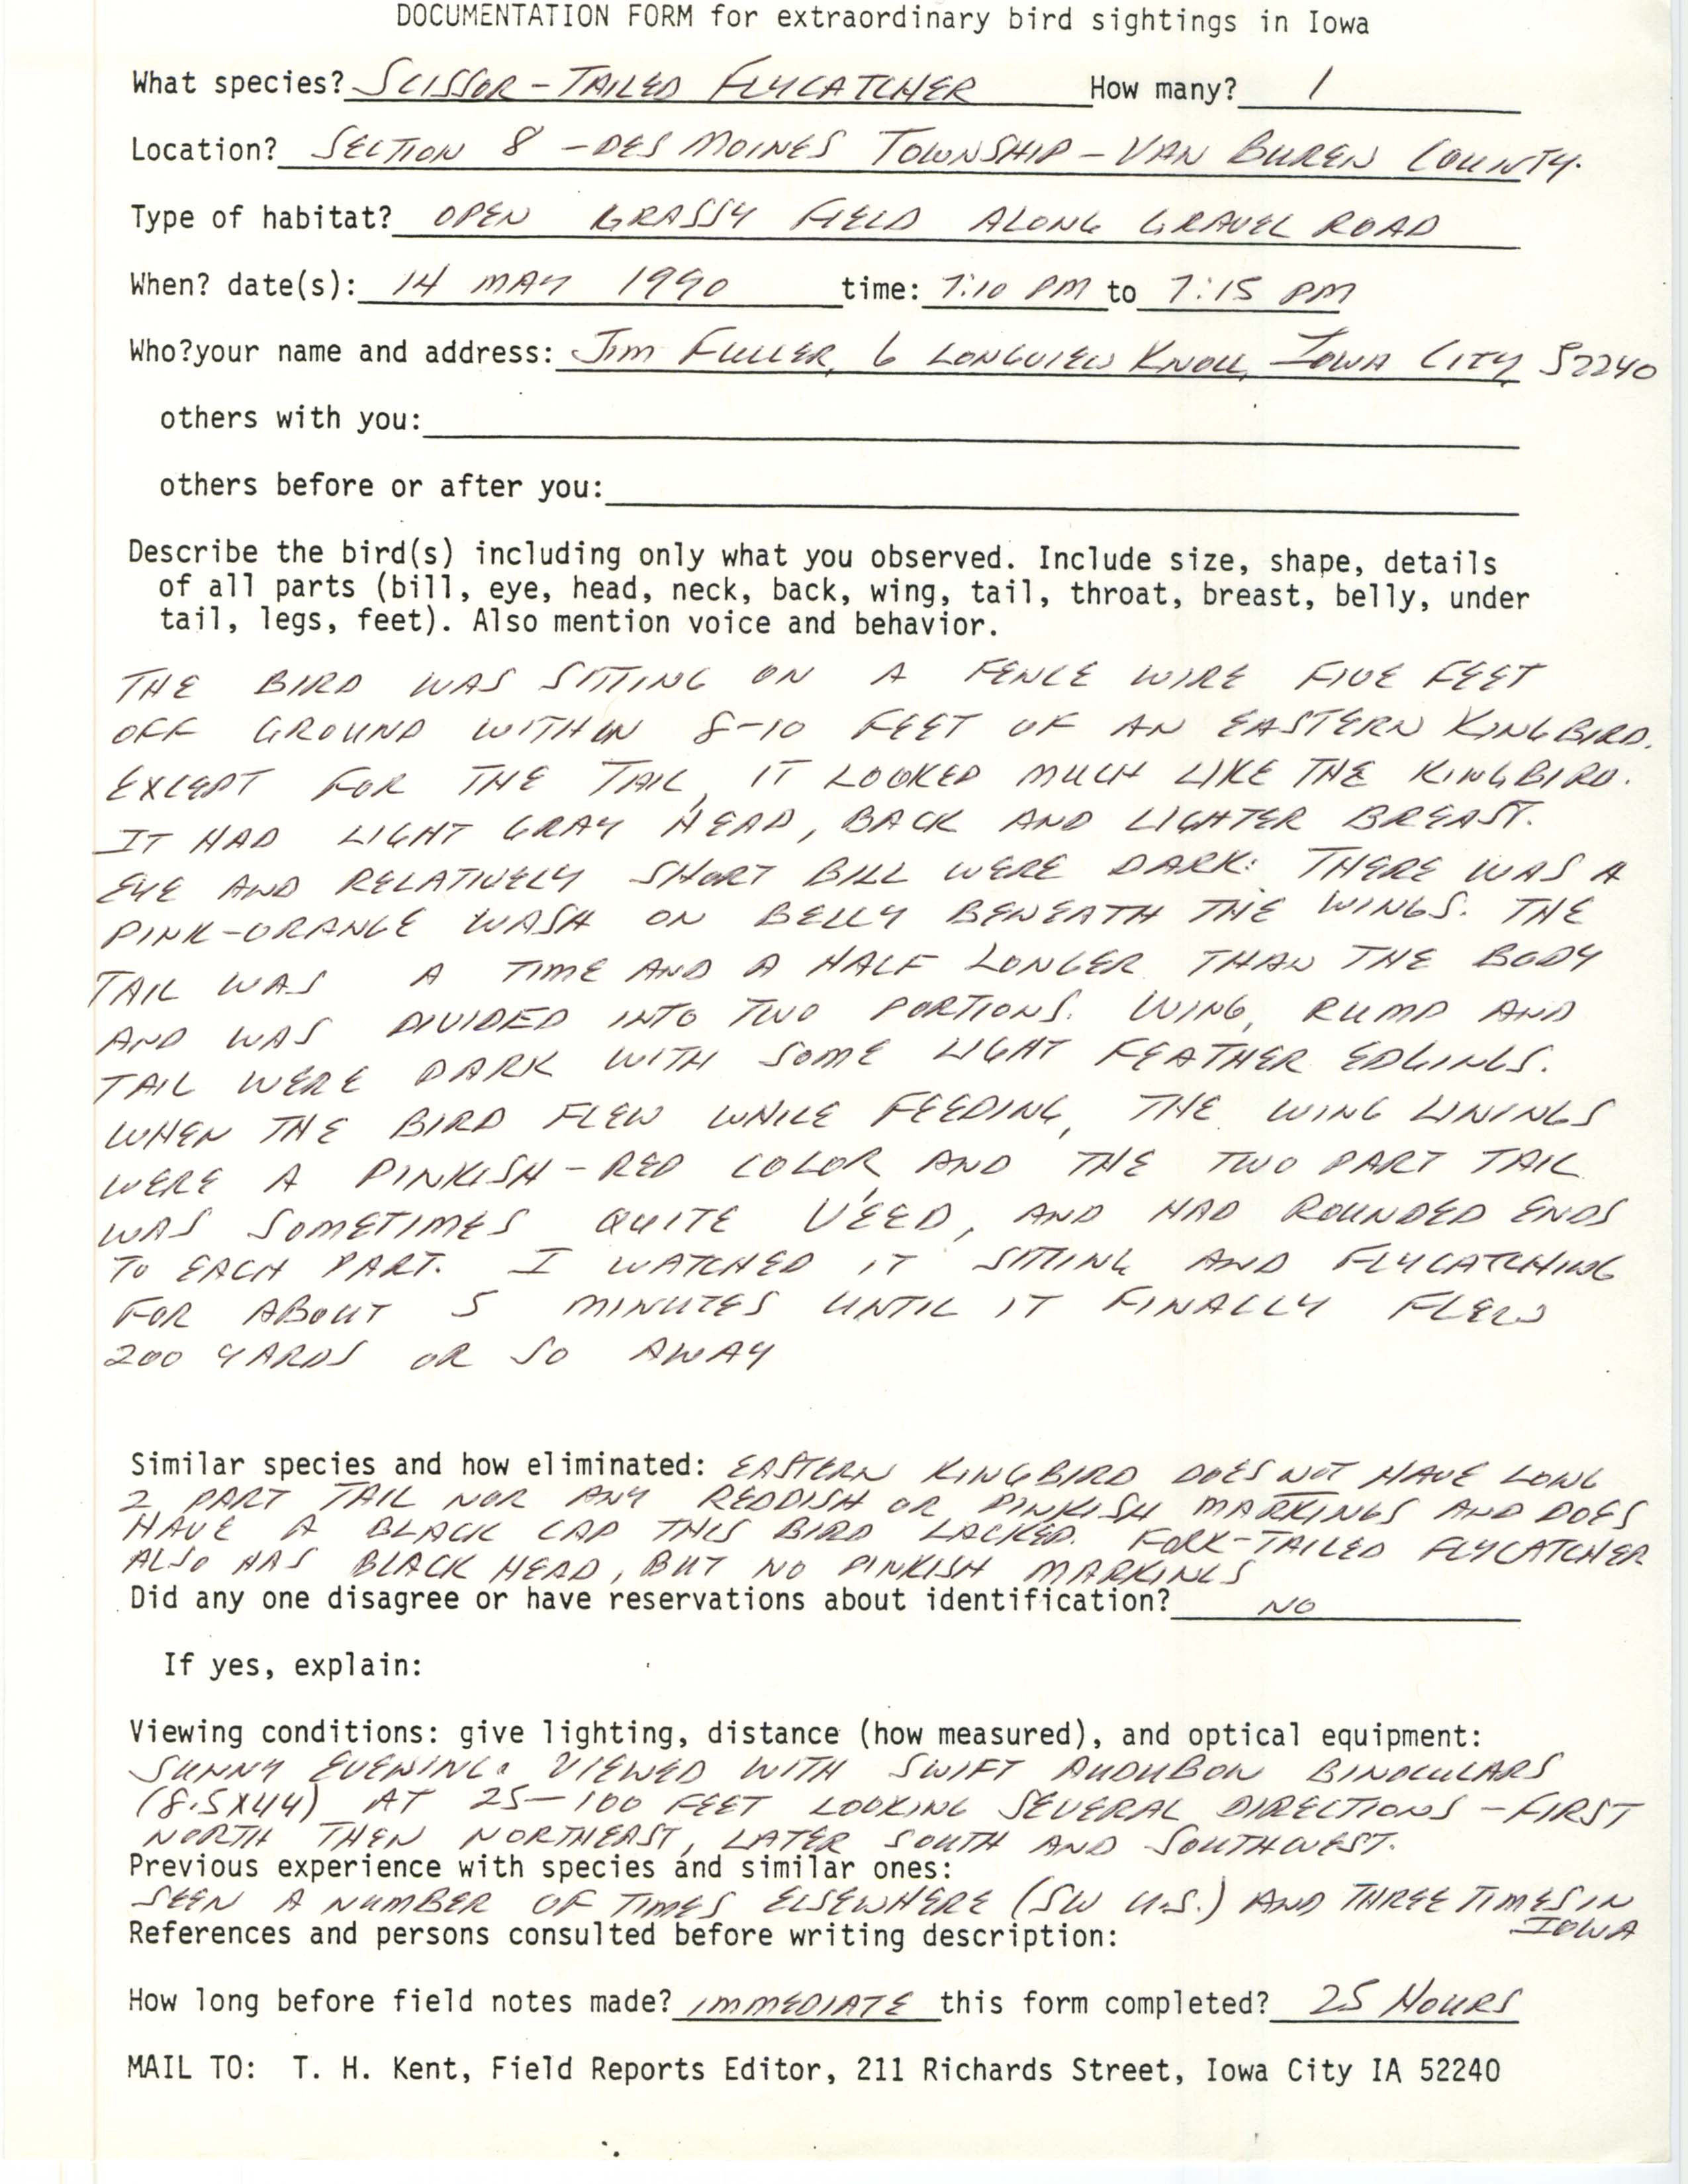 Rare bird documentation form for Scissor-tailed Flycatcher at Des Moines Township in Van Buren County, 1990